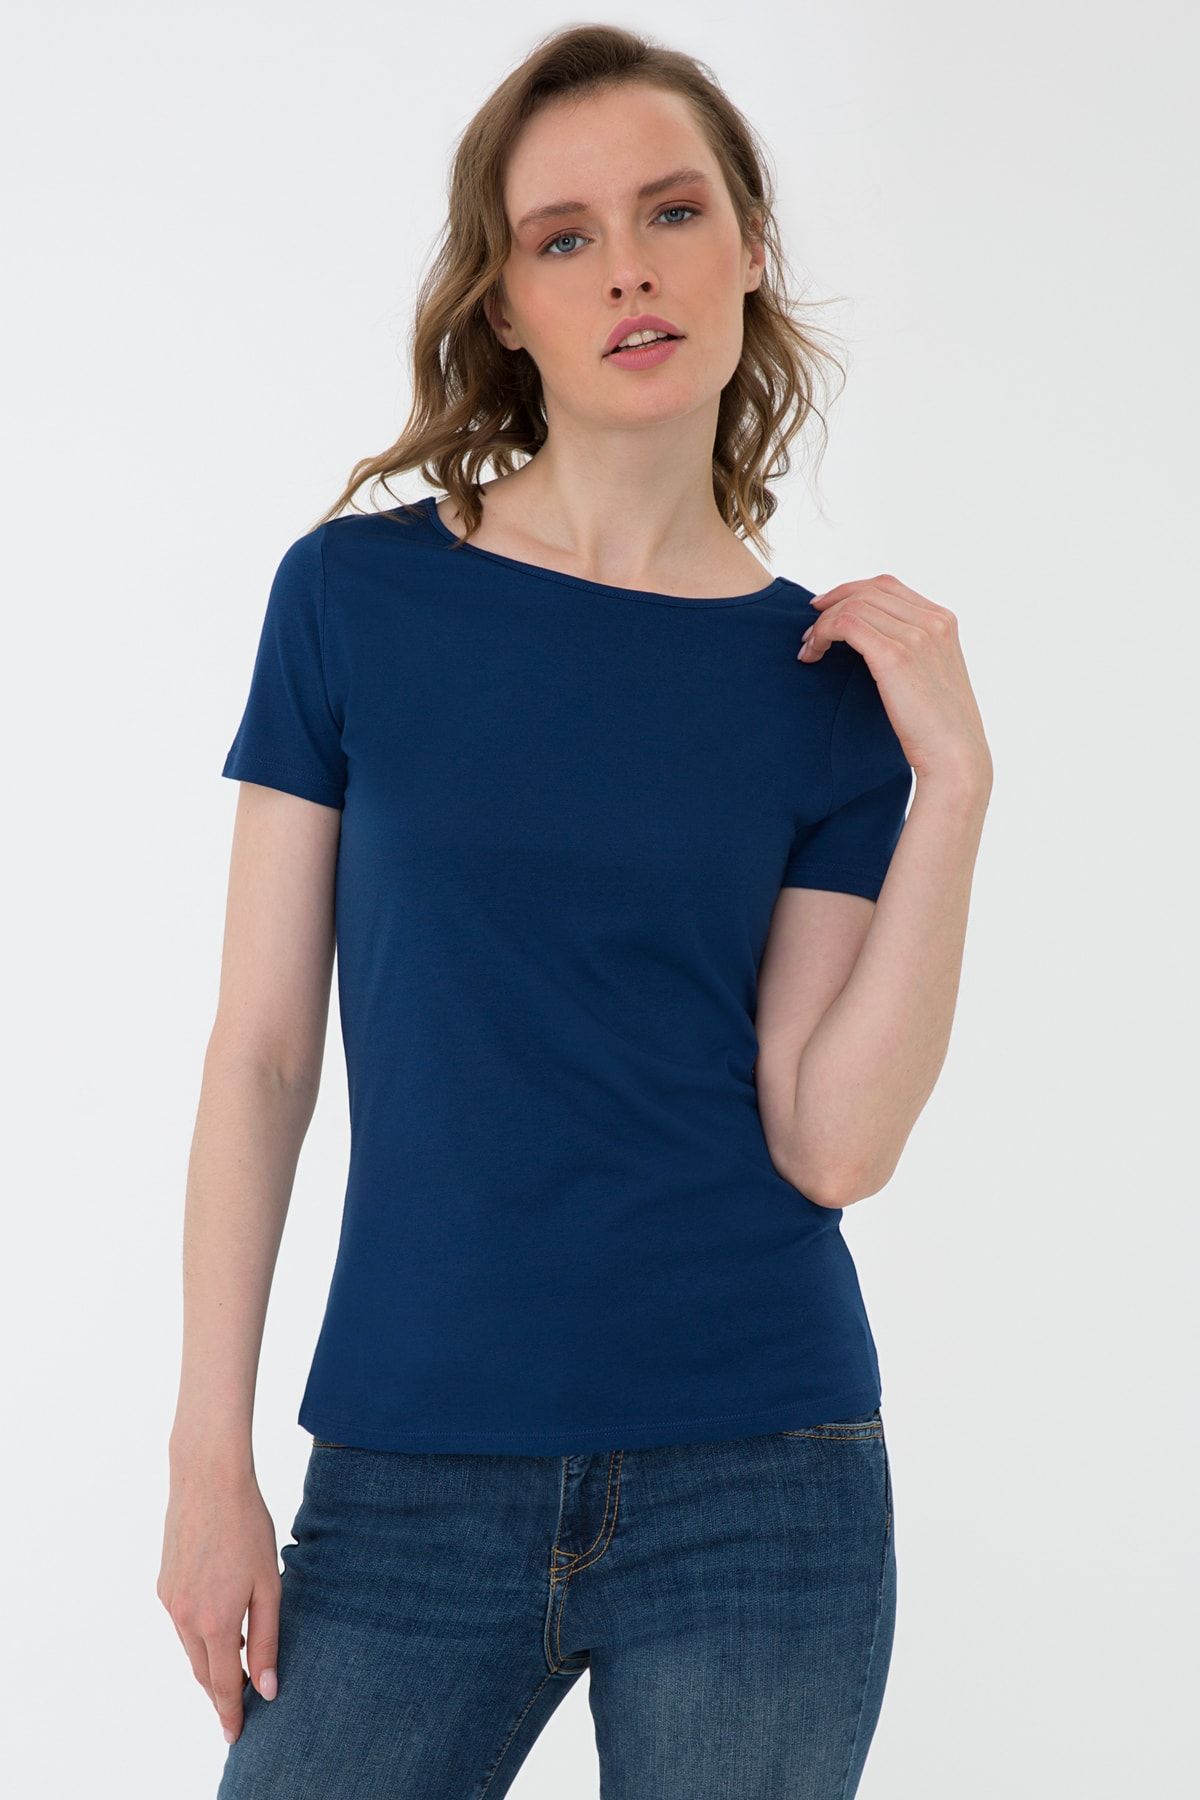 Pierre Cardin Lacivert Kadın T-Shirt G022SZ011.000.762141.VR033